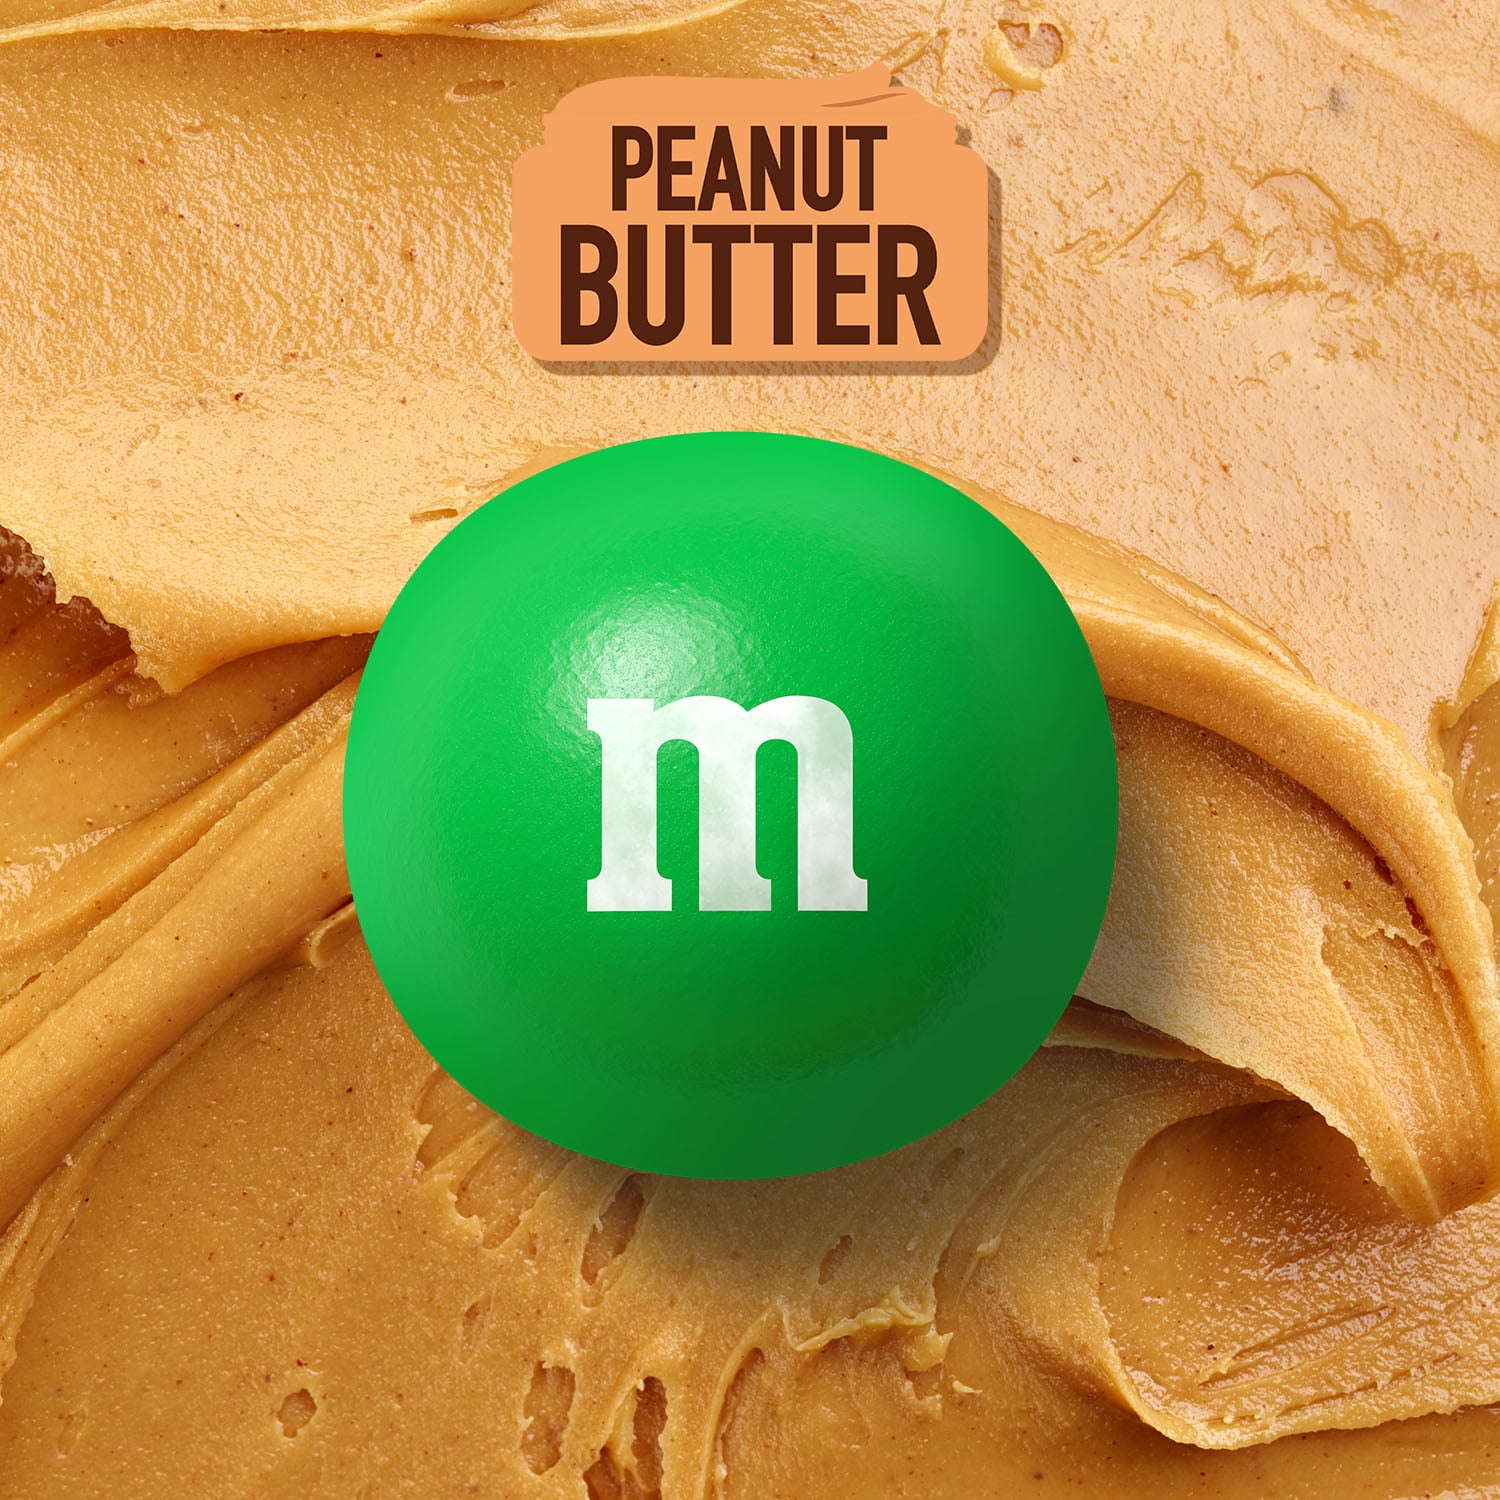 M&M's Chocolate Candies, Peanut Butter 1.63 oz, Chocolate & Bars